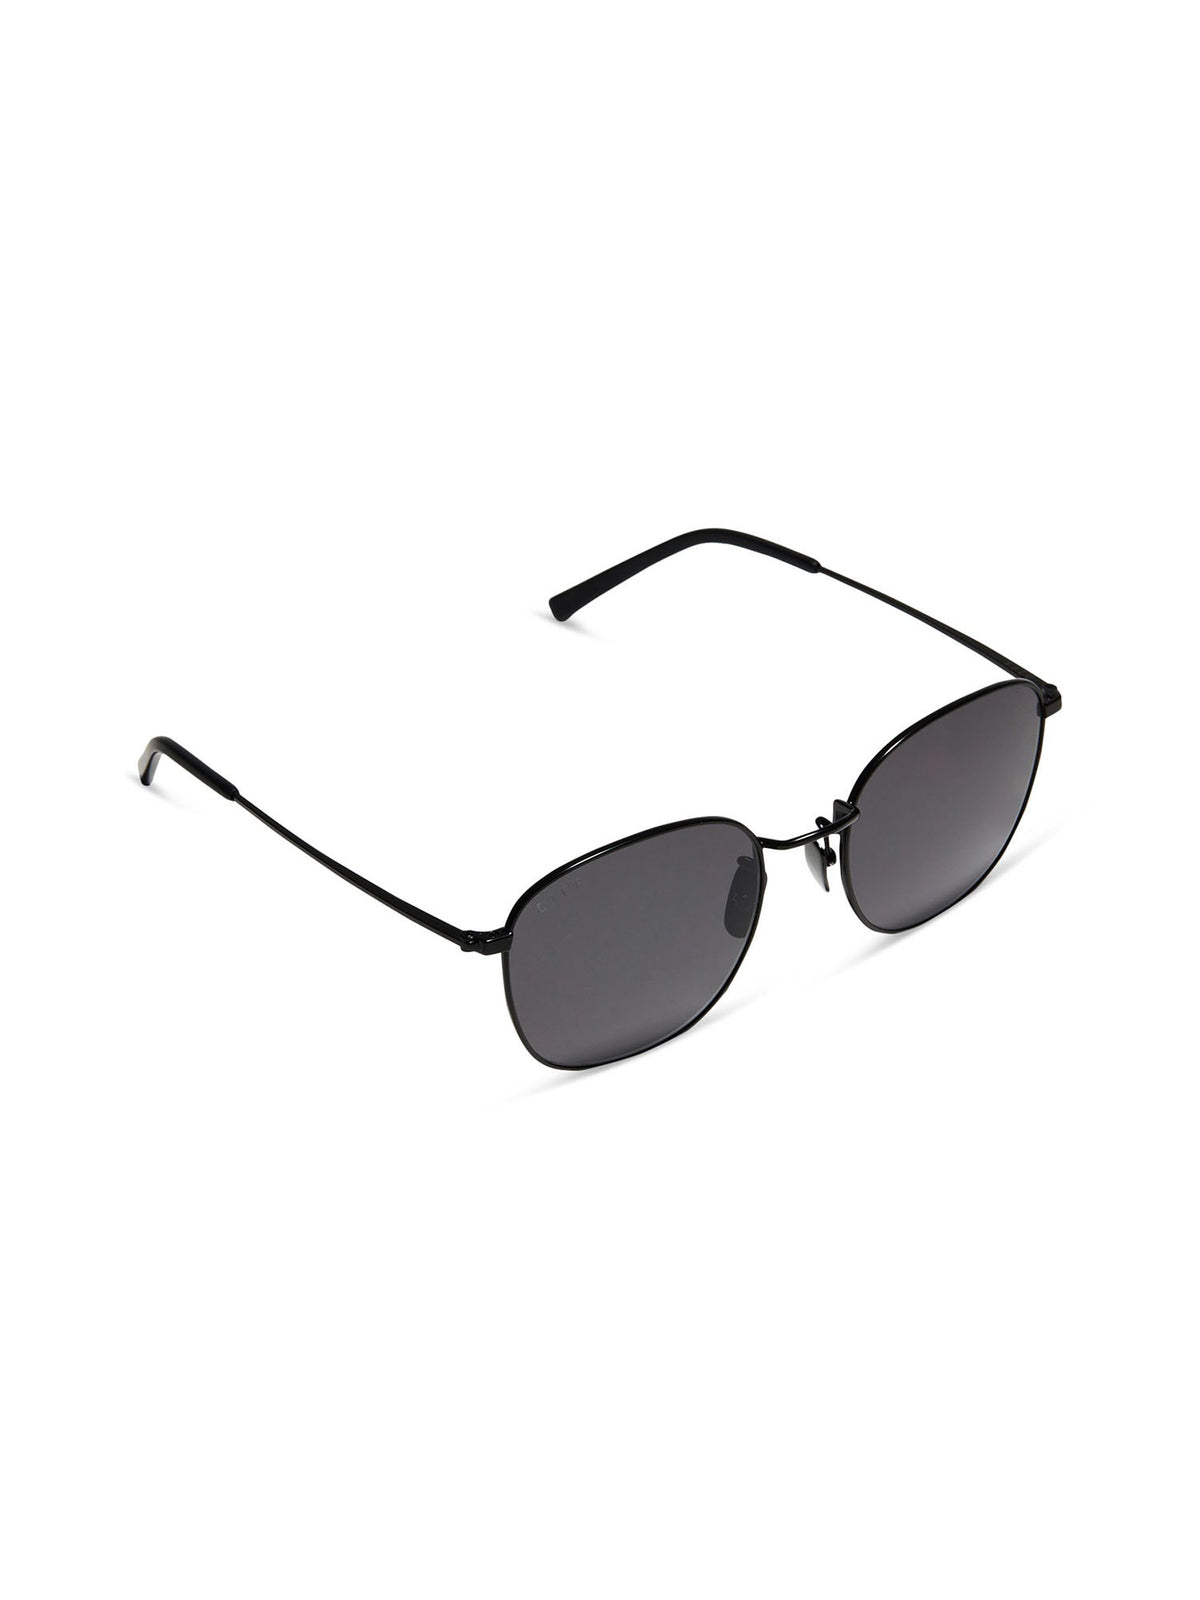 diff eyewear axel sunglasses in matte black grey